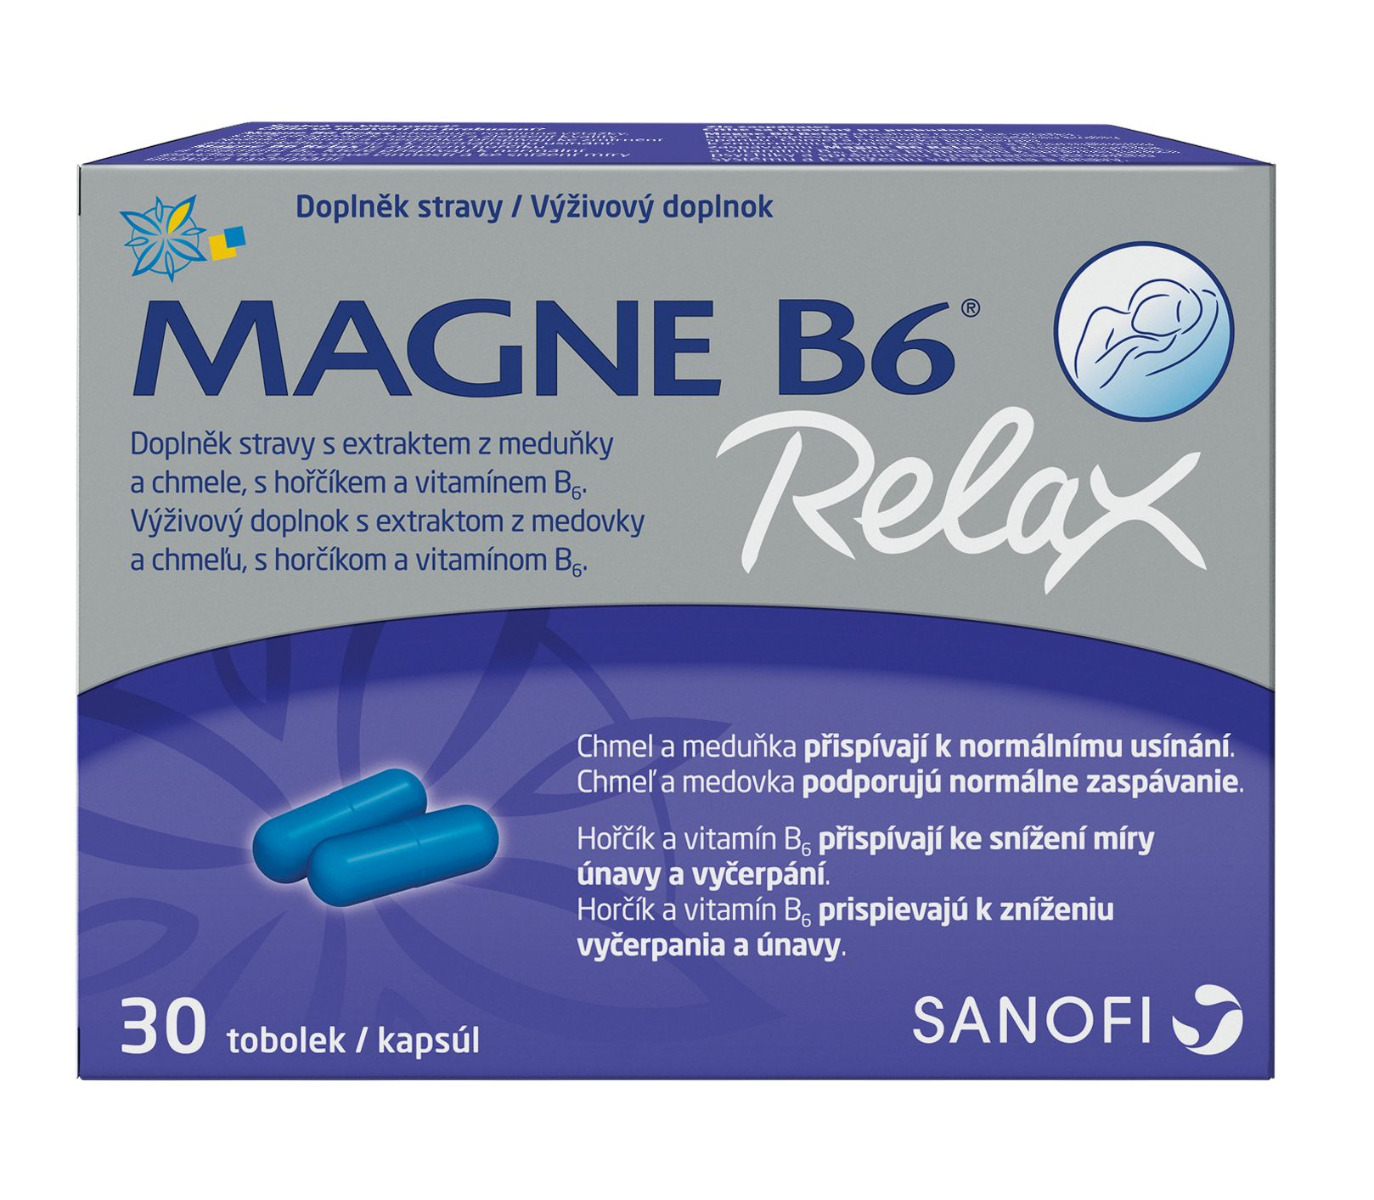 Magne B6 Relax 30 tobolek Magne B6